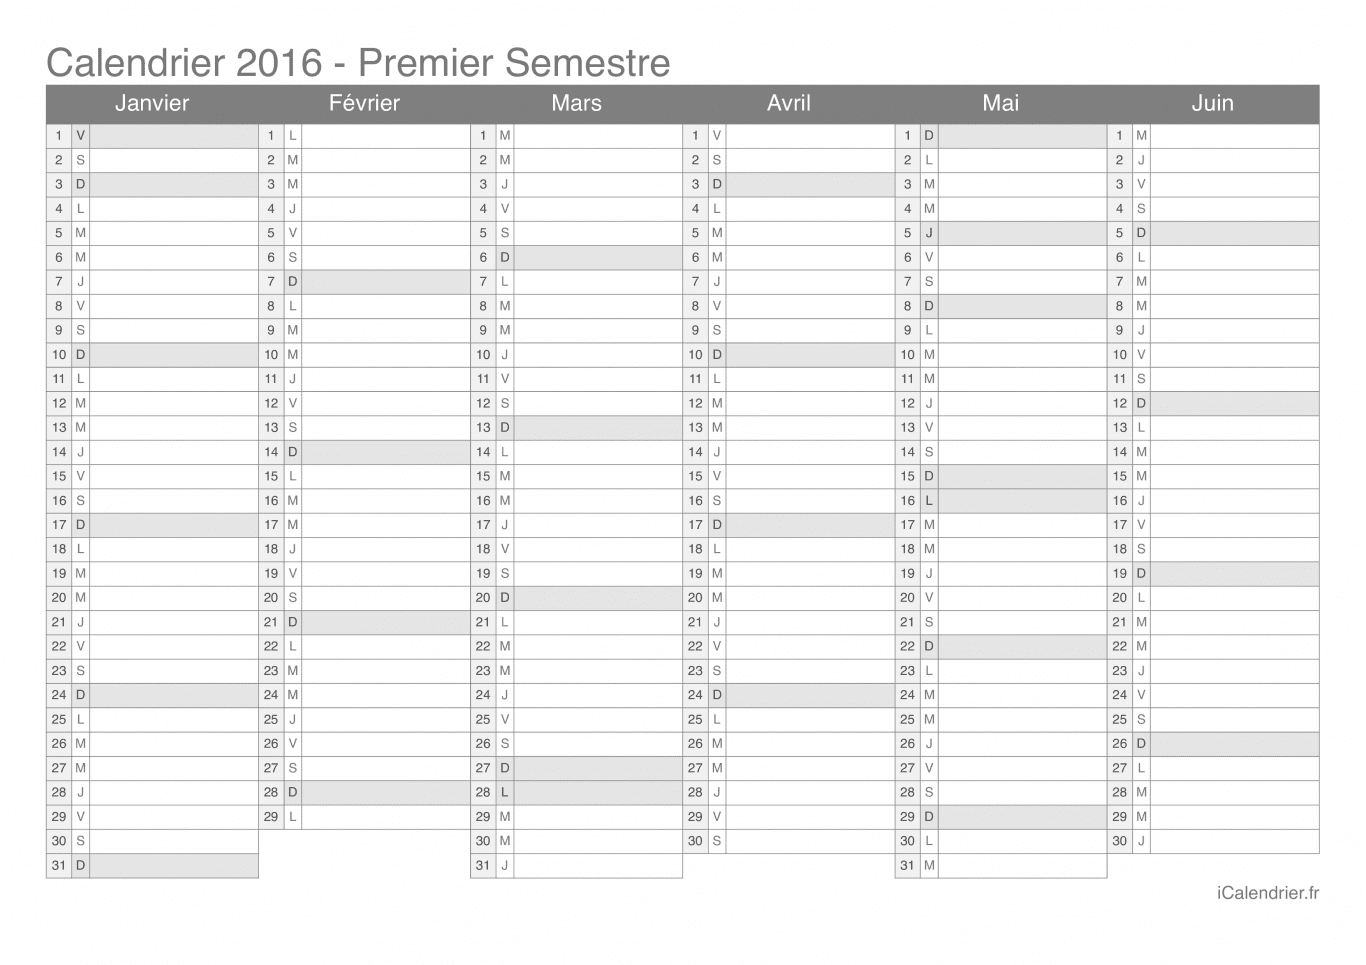 Calendrier par semestre 2016